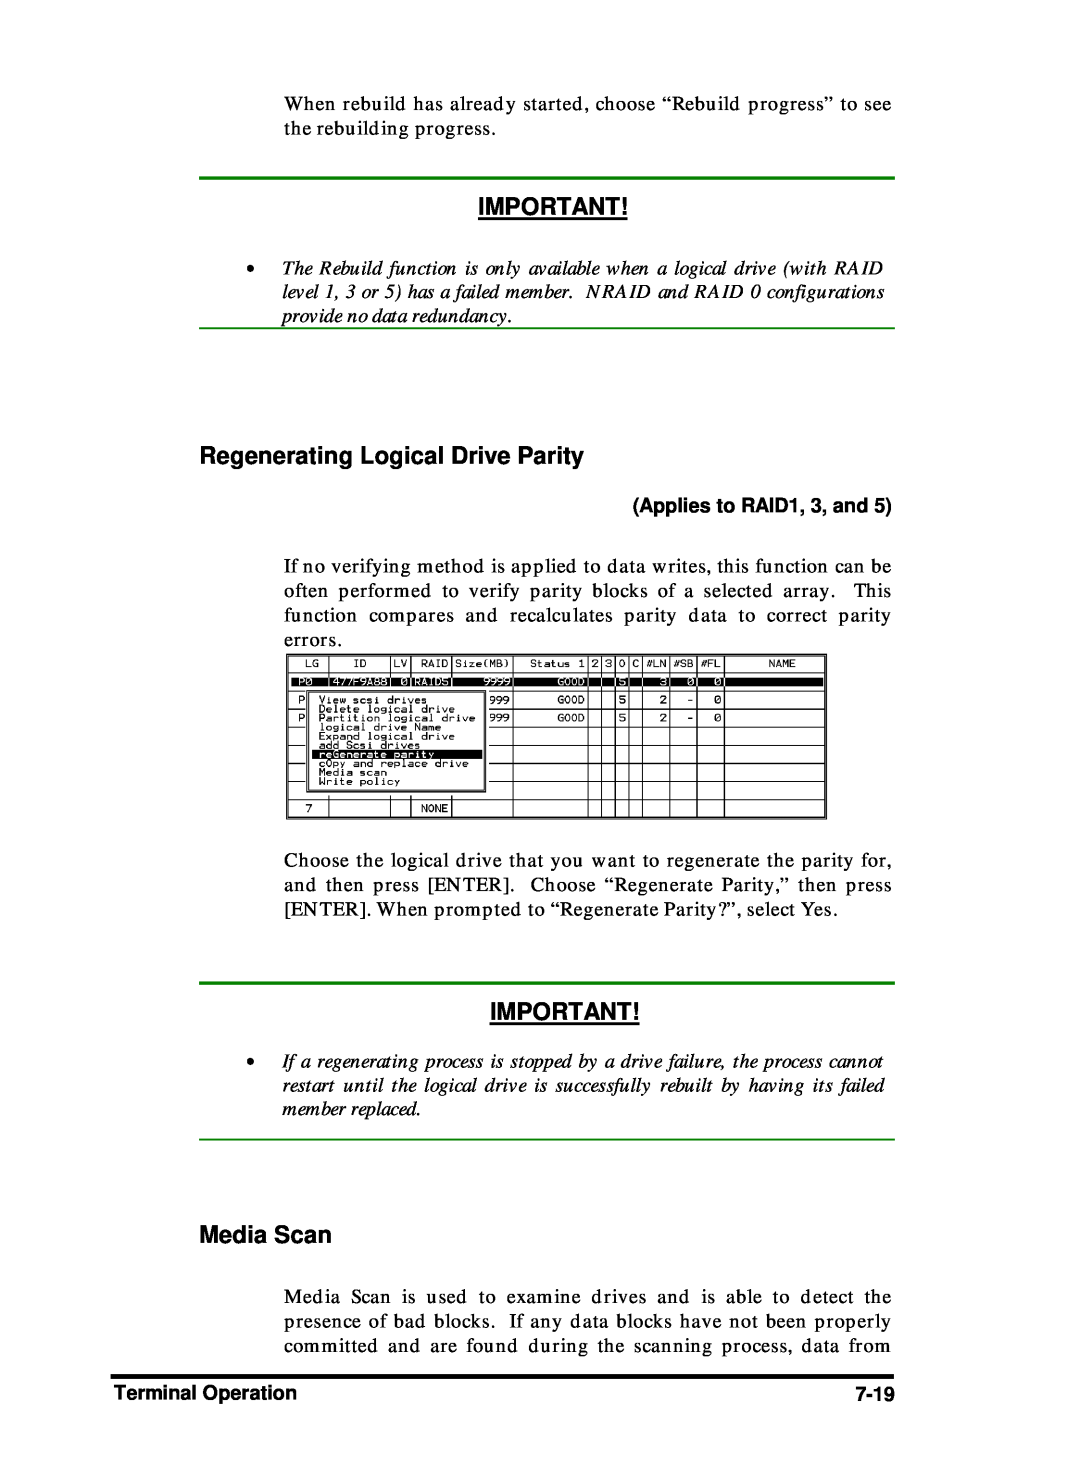 Compaq Infortrend manual Regenerating Logical Drive Parity, Media Scan 